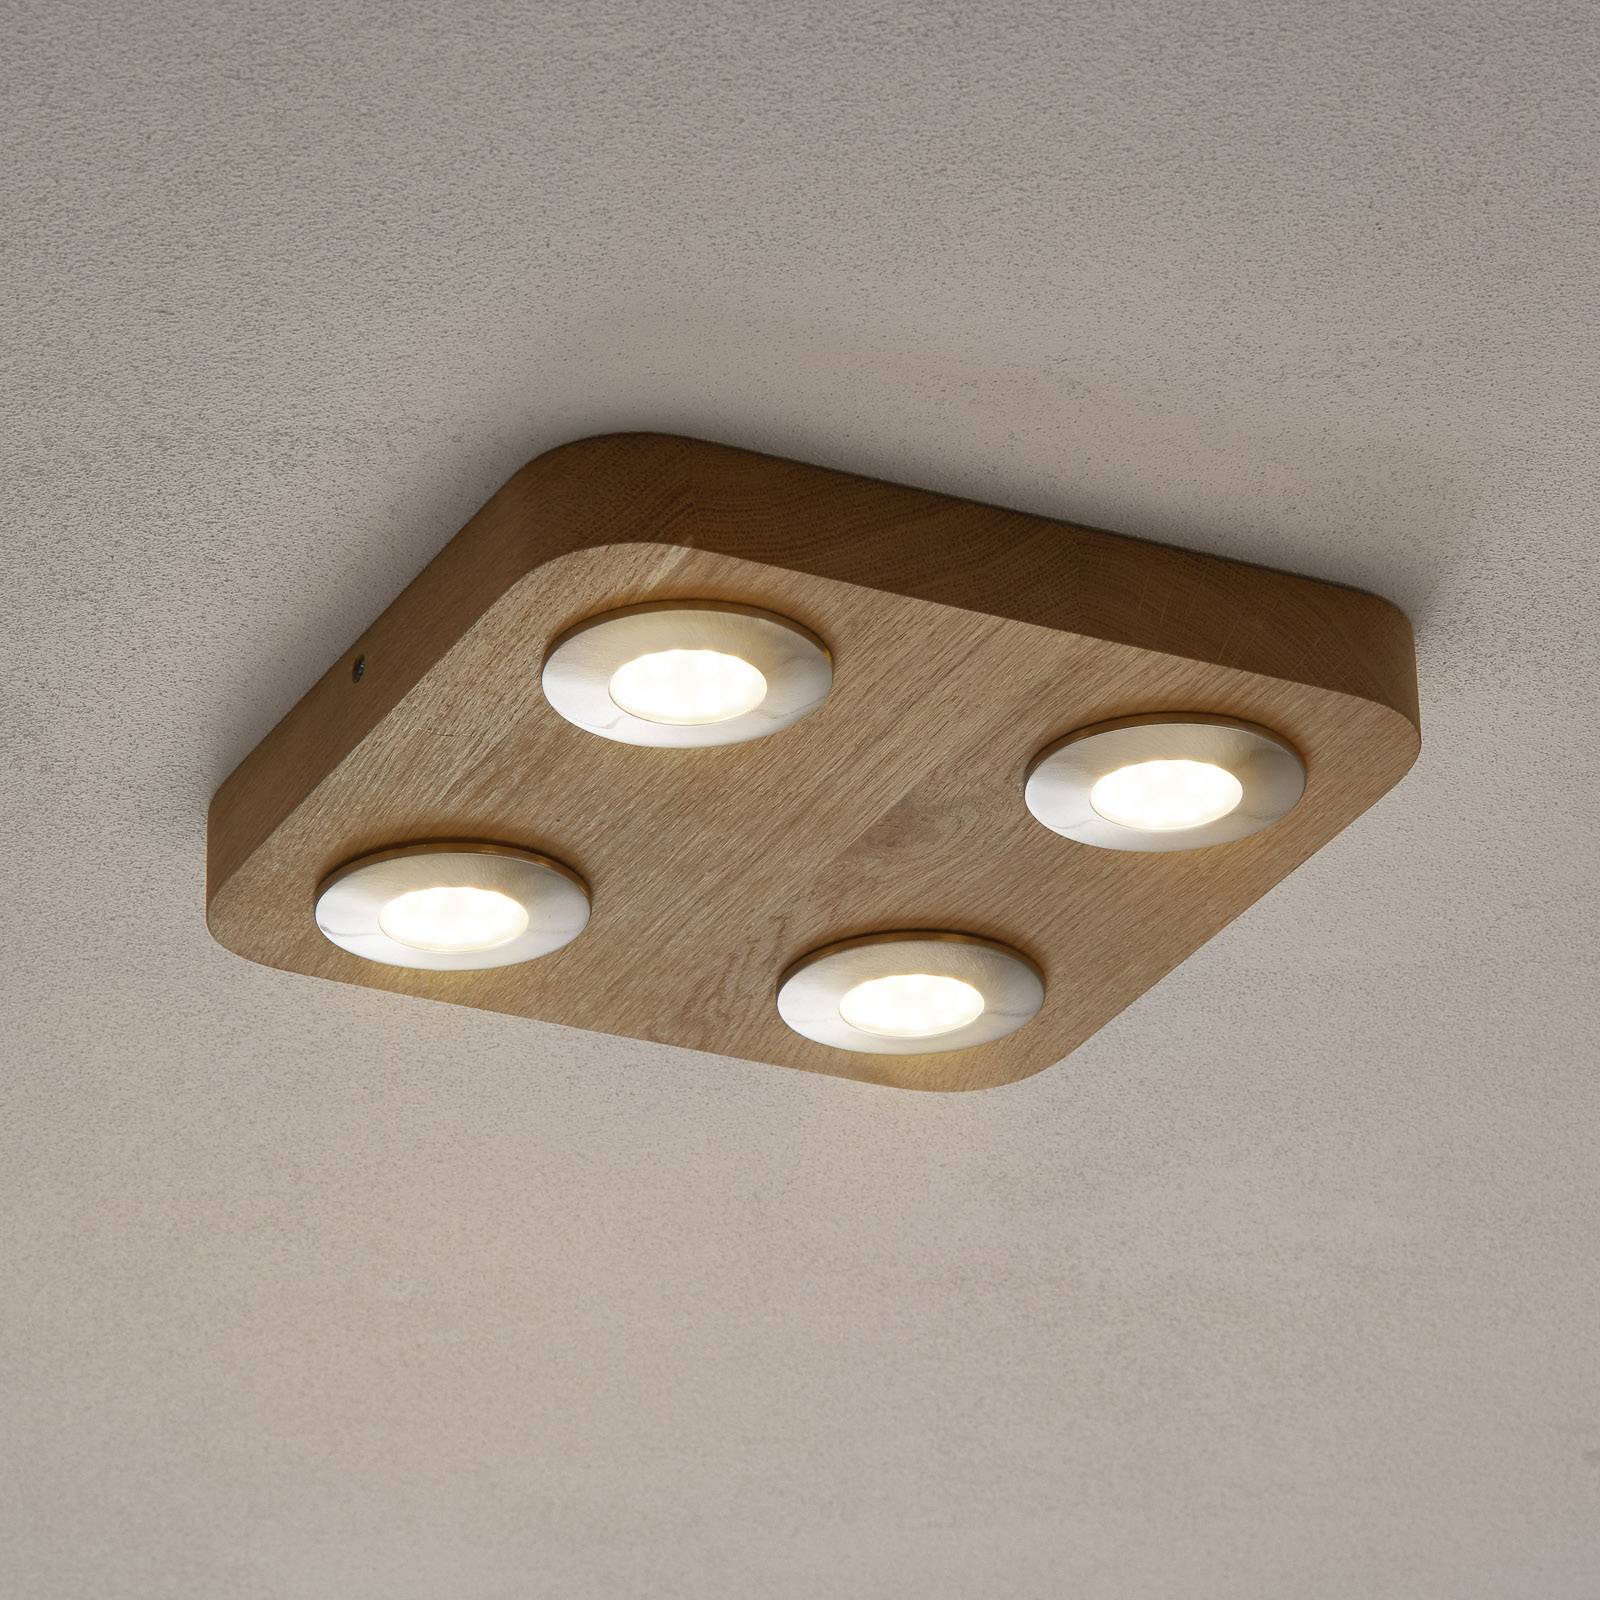 Spot-Light 4-flammige LED-Deckenlampe Sunniva aus Eichenholz